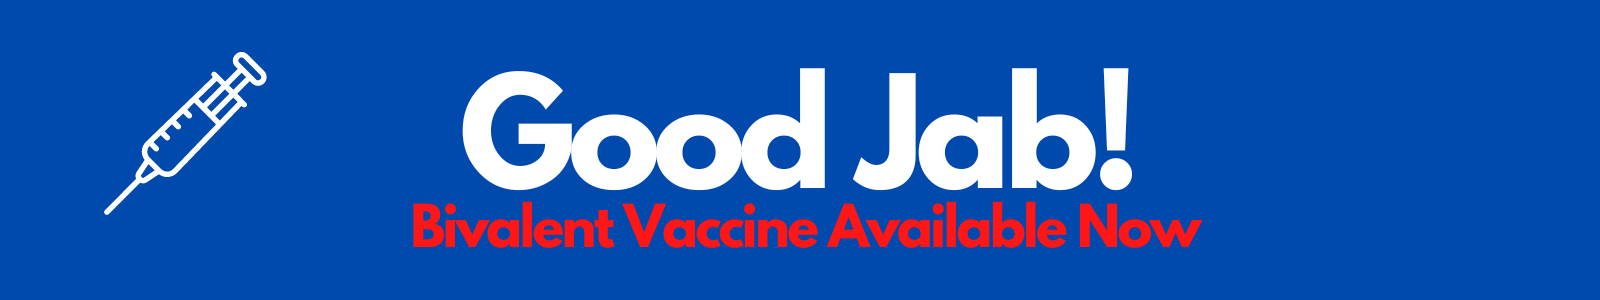 BIVALENT COVID-19 Vaccine Available